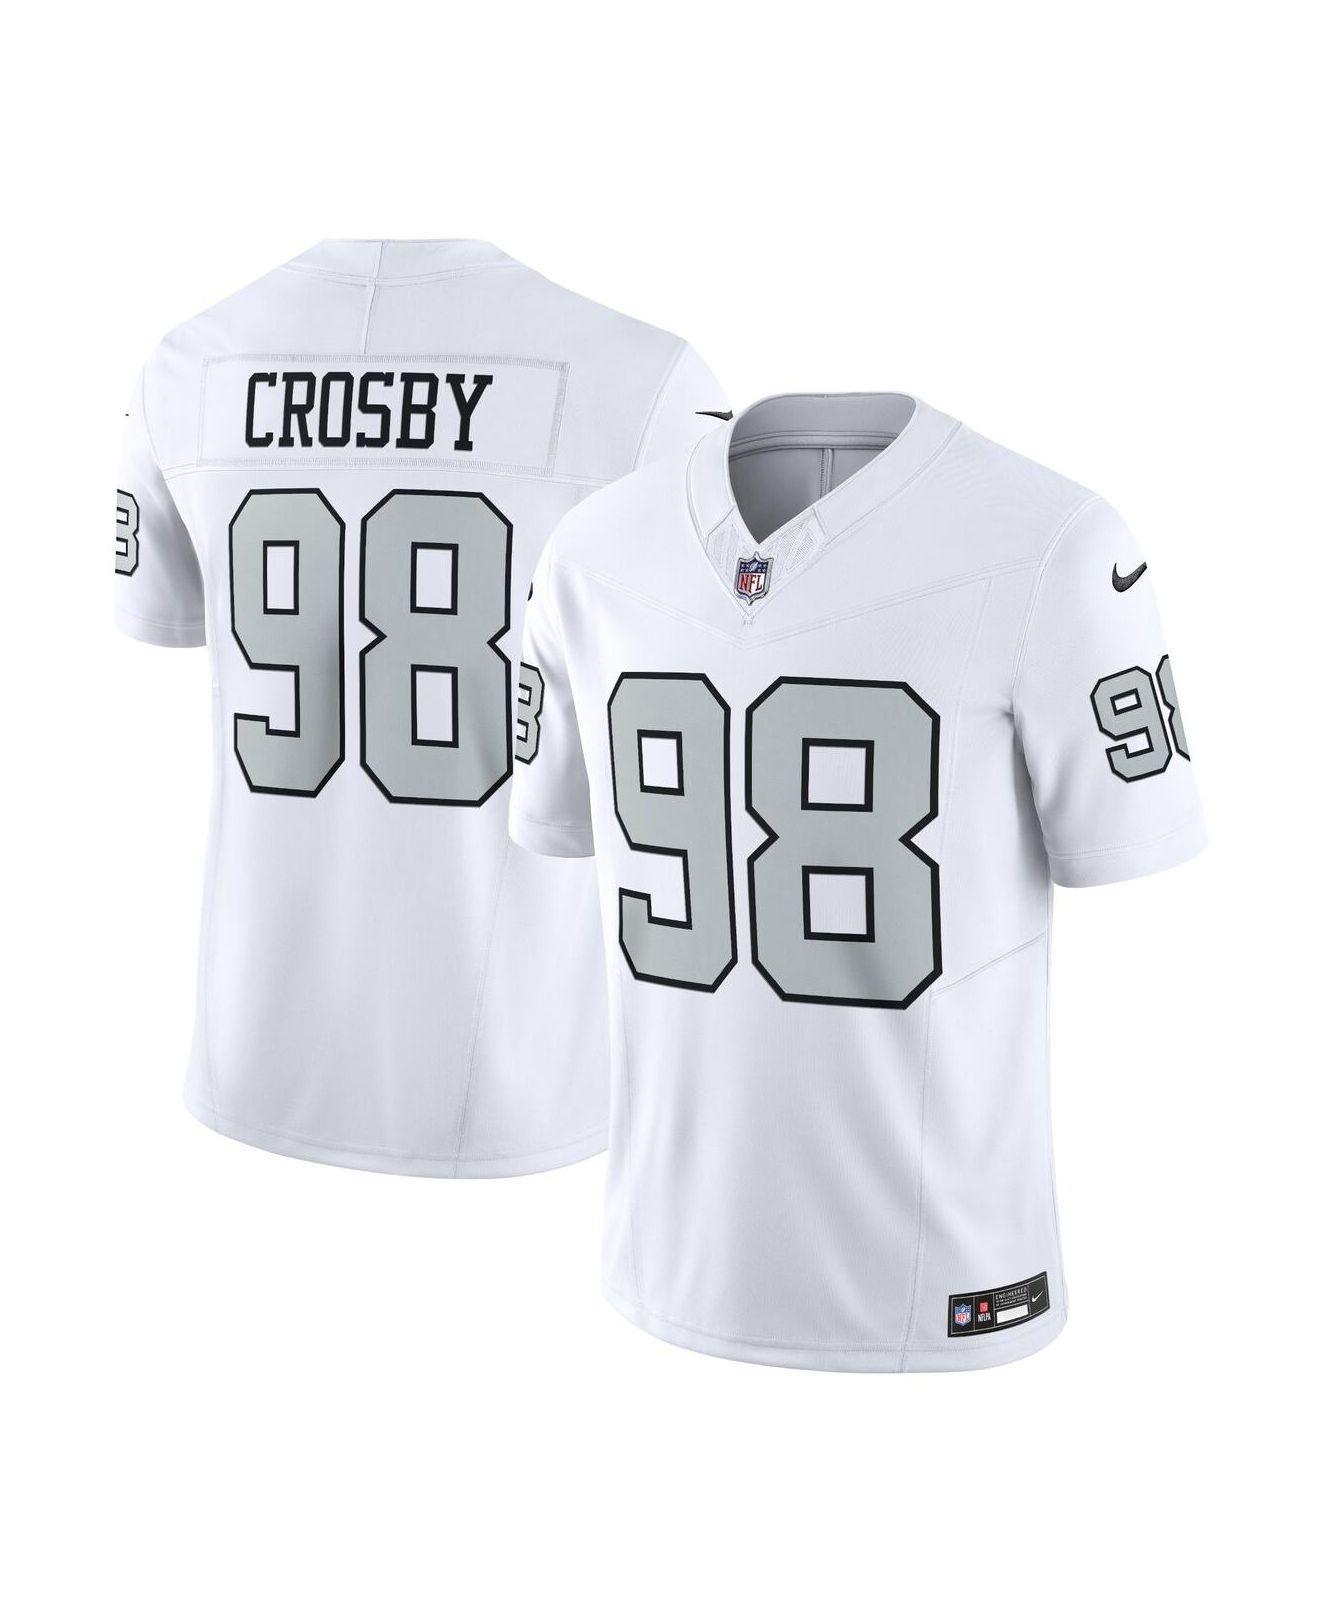 Official Las Vegas Raiders Maxx Crosby Jerseys, Raiders Maxx Crosby Jersey,  Jerseys